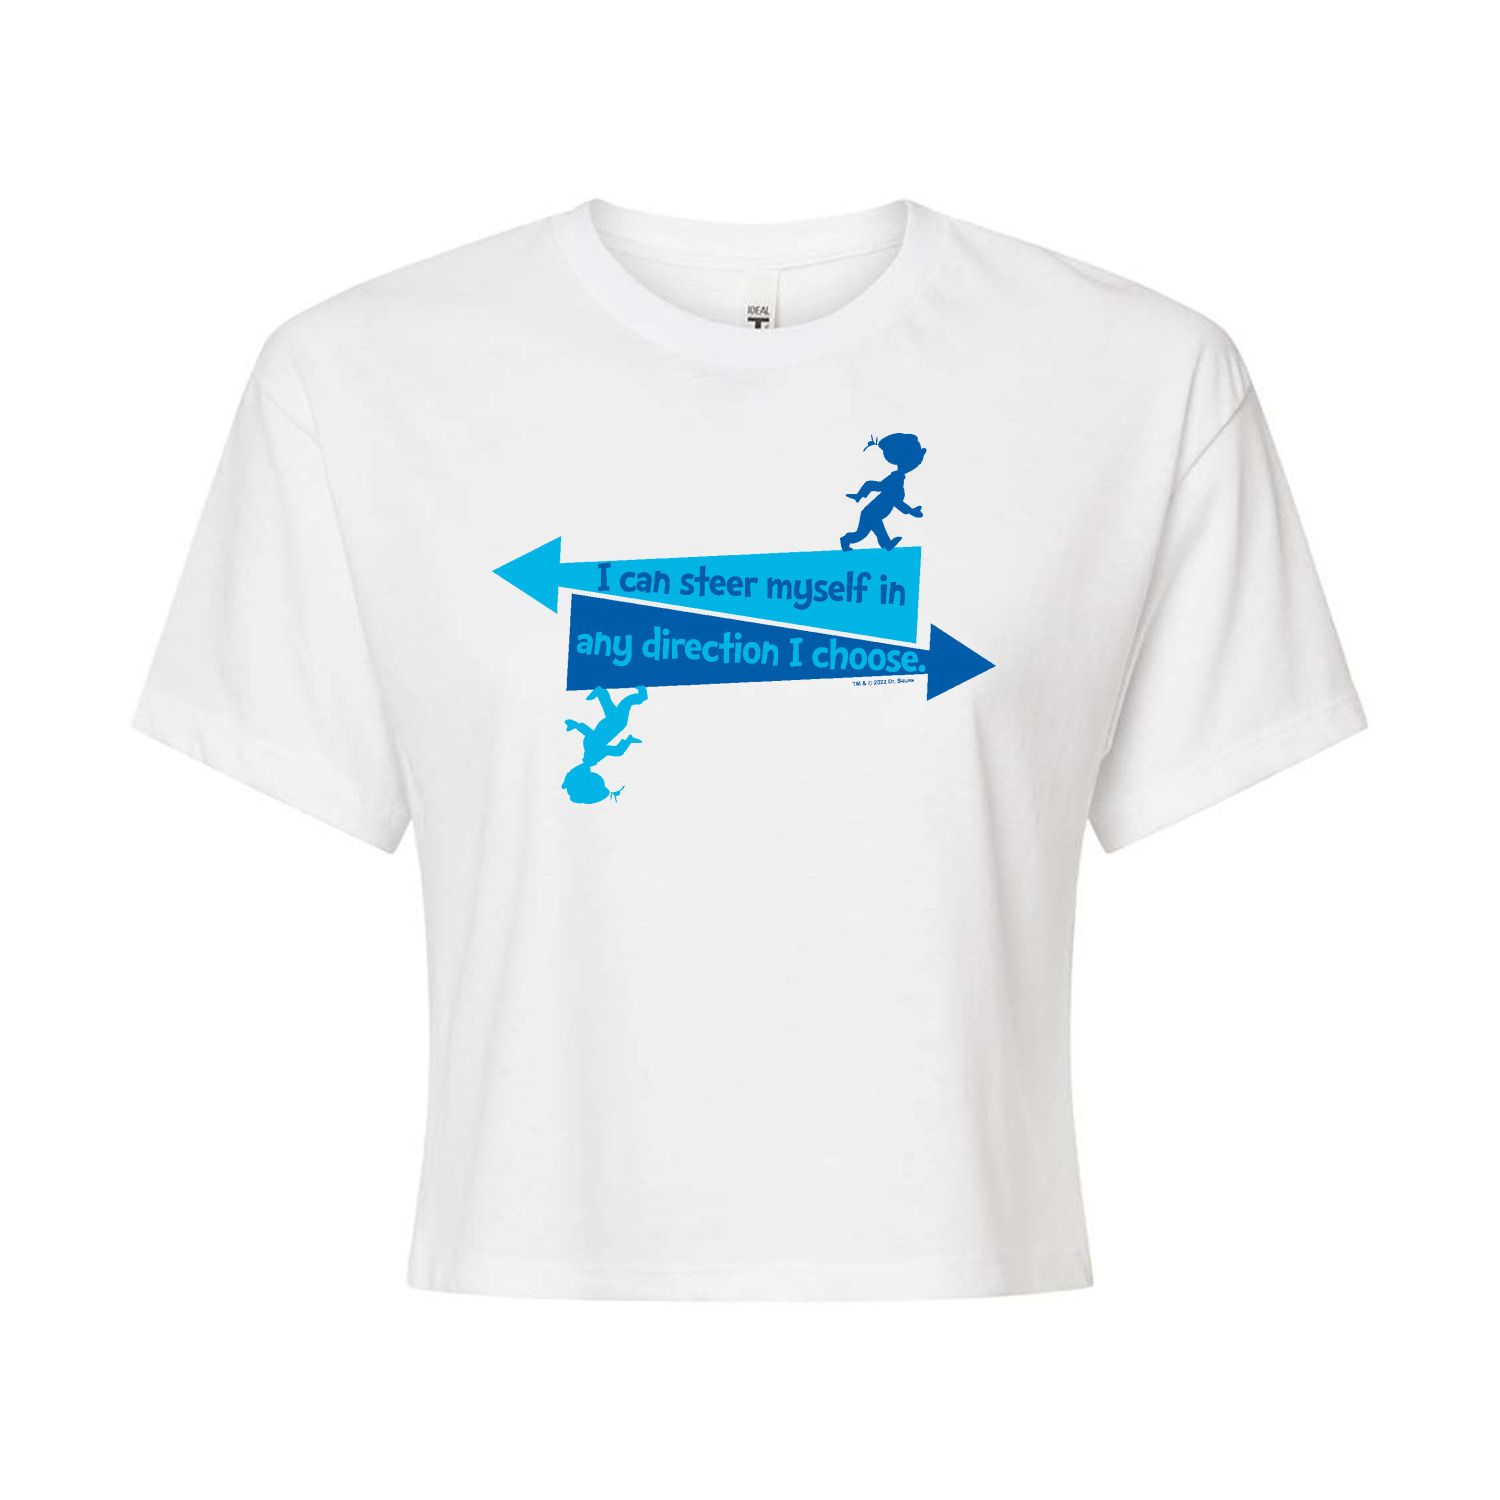 Укороченная футболка Dr. Seuss Steer Yourself для юниоров Licensed Character, белый